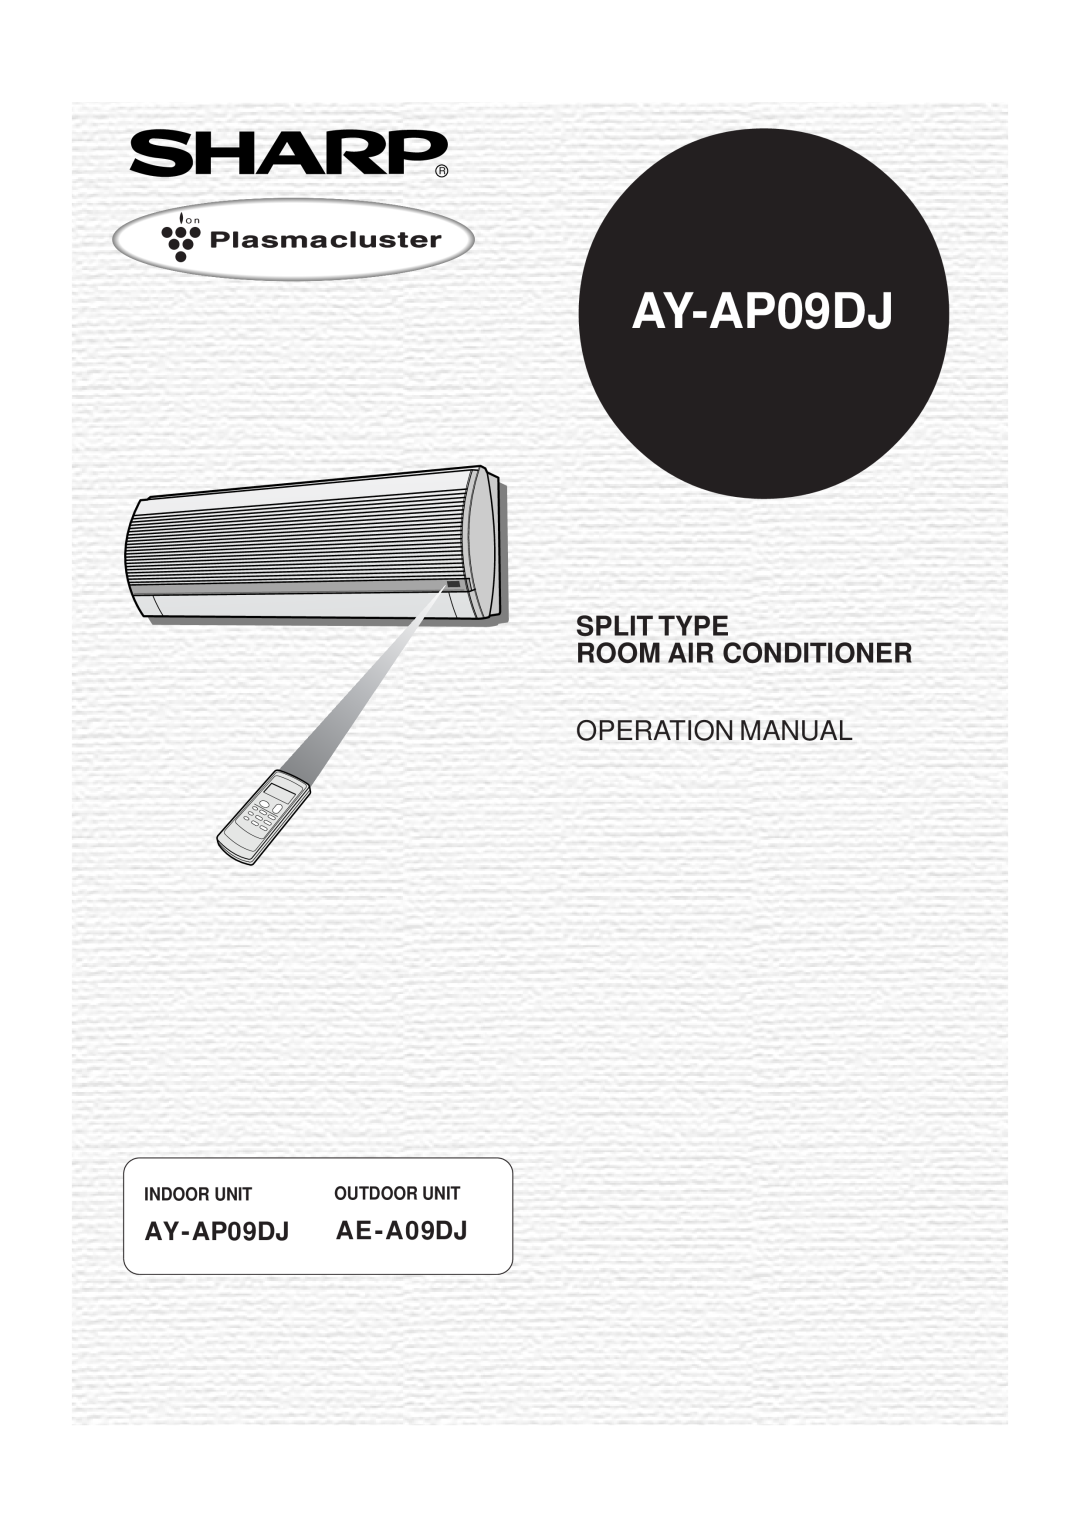 Sharp AE-A09DJ operation manual Split Type Room Air Conditioner, AY-AP09DJAE -A09DJ, Outdoor Unit 